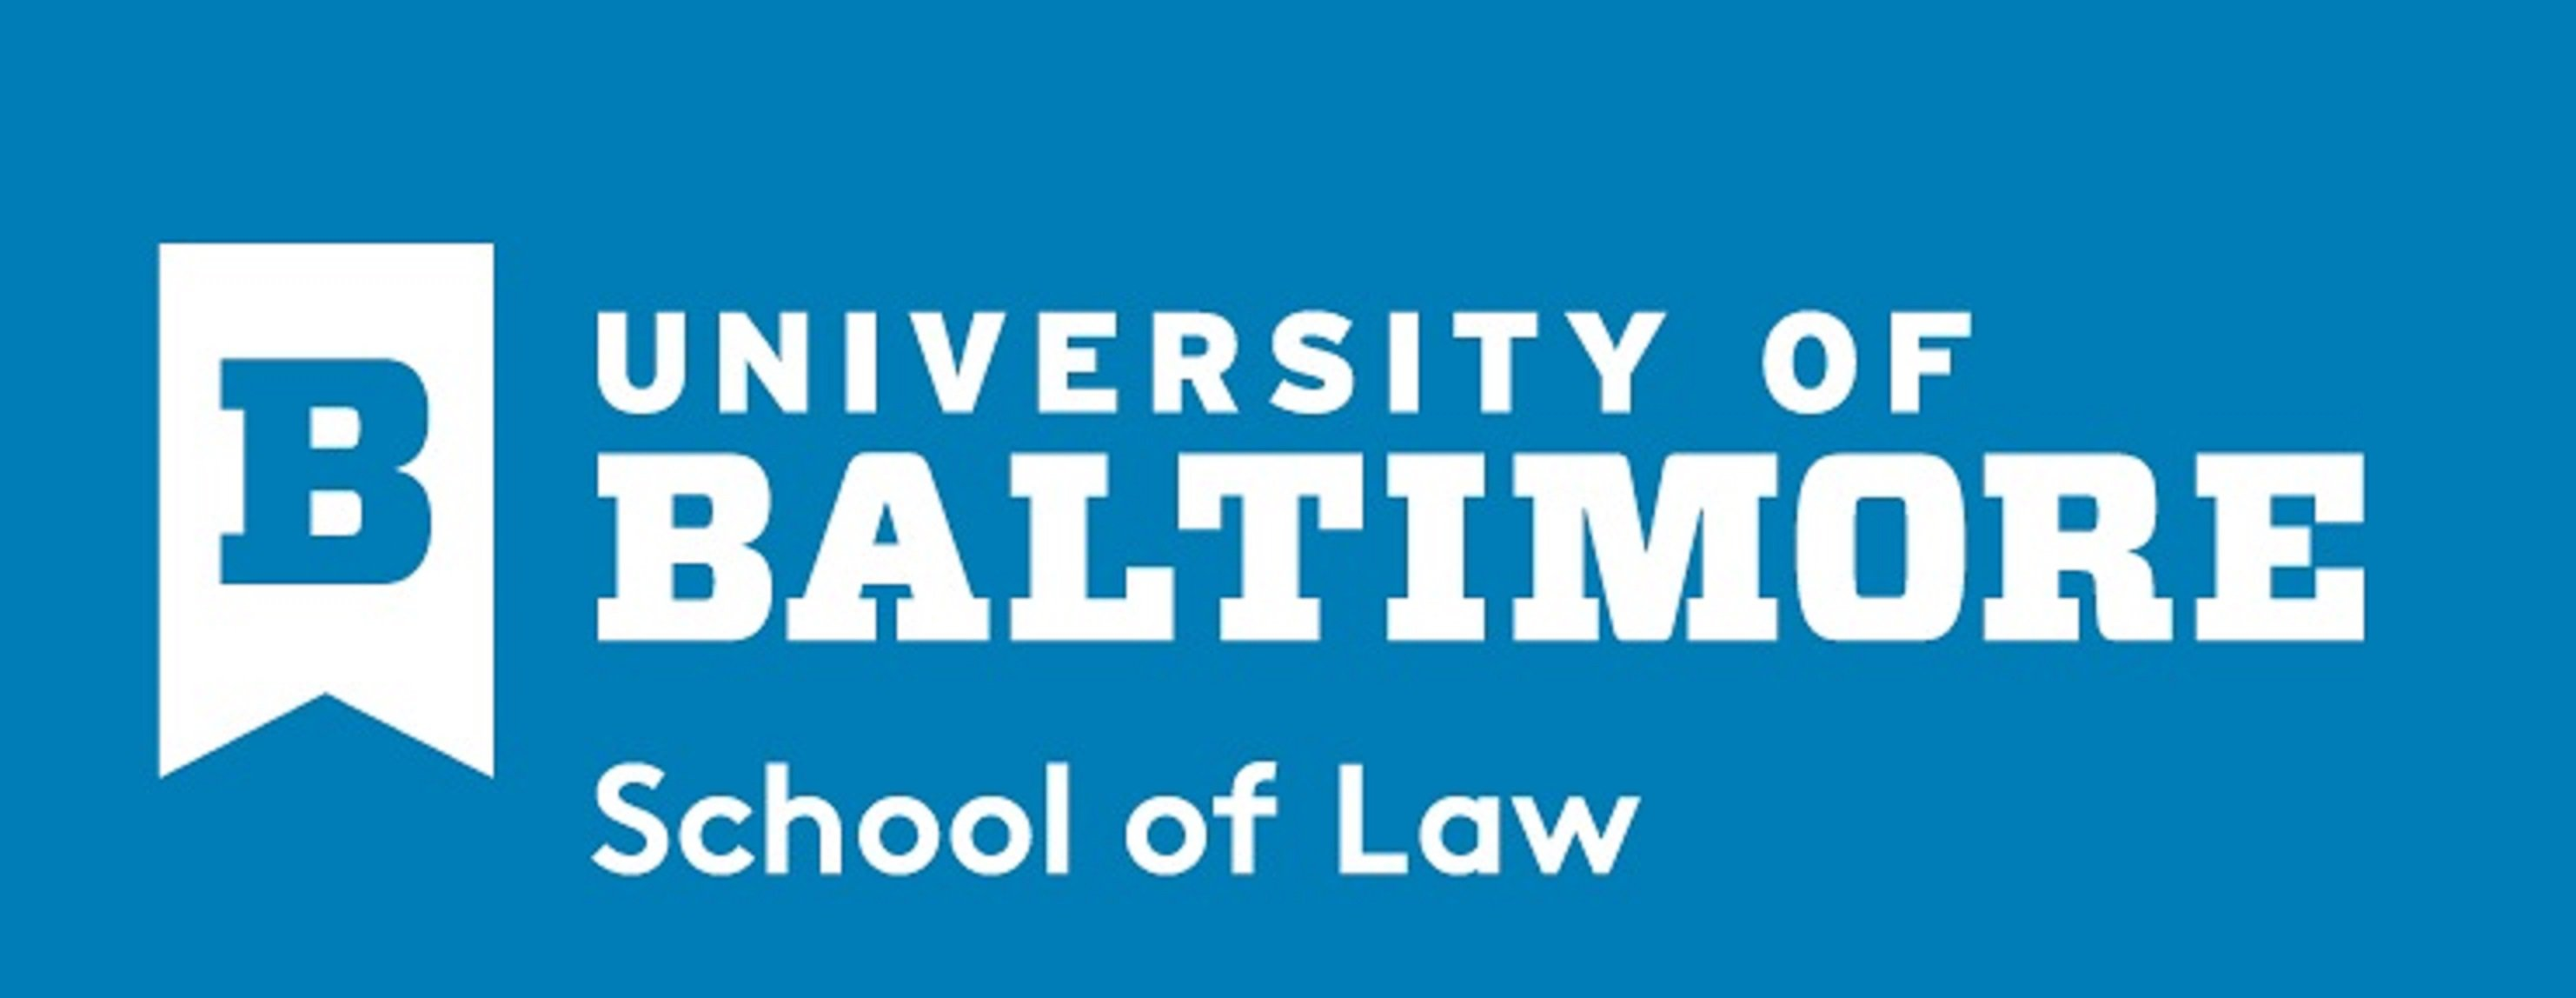 University of Baltimore School of Law Logo Image.